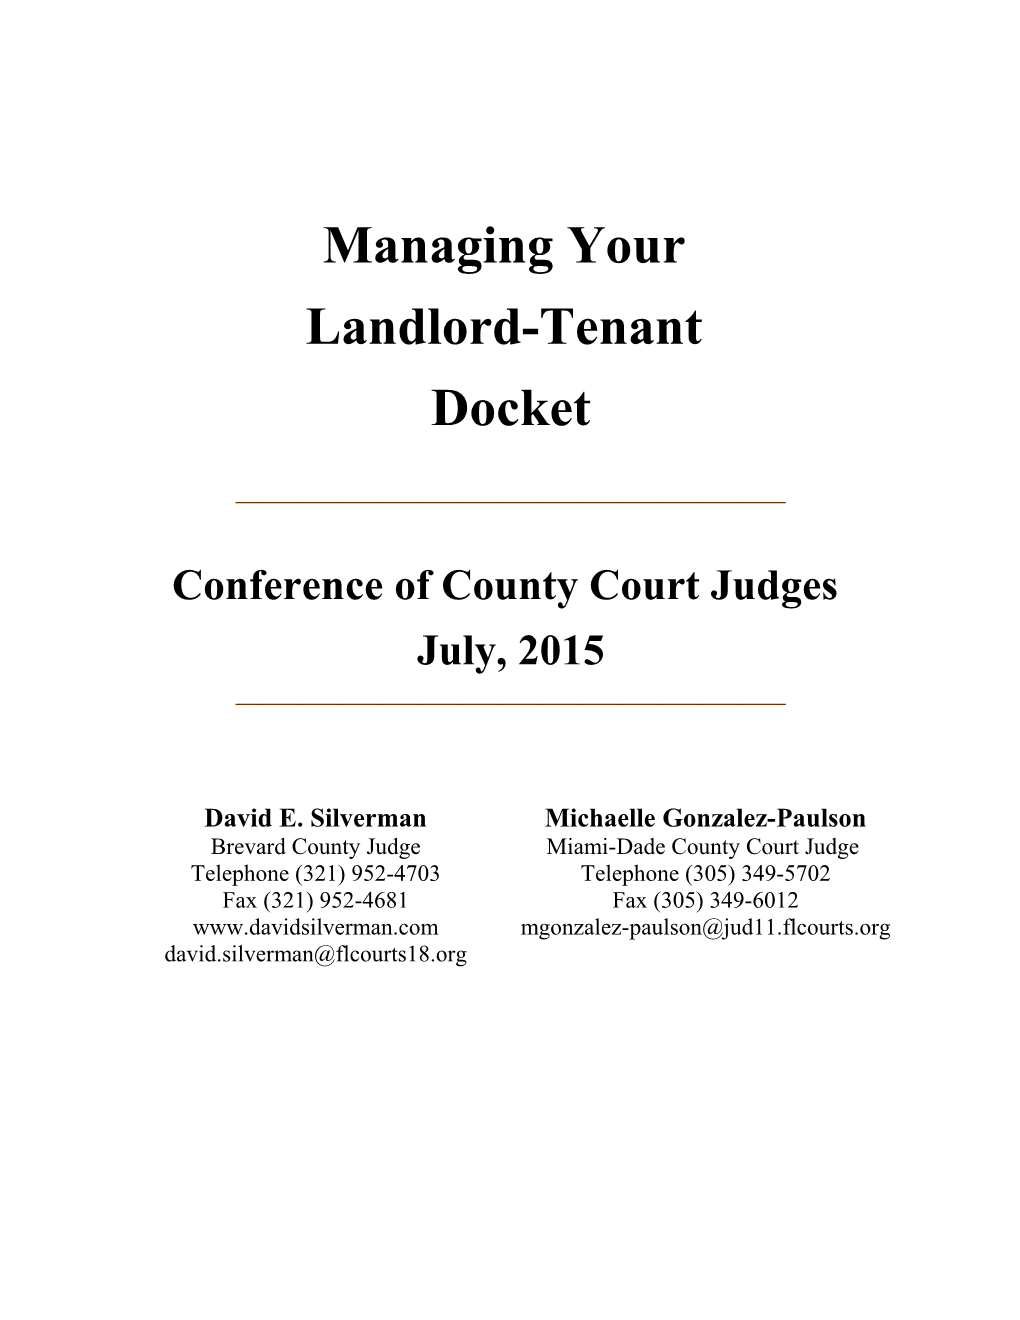 Residential Landlord/Tenant Law